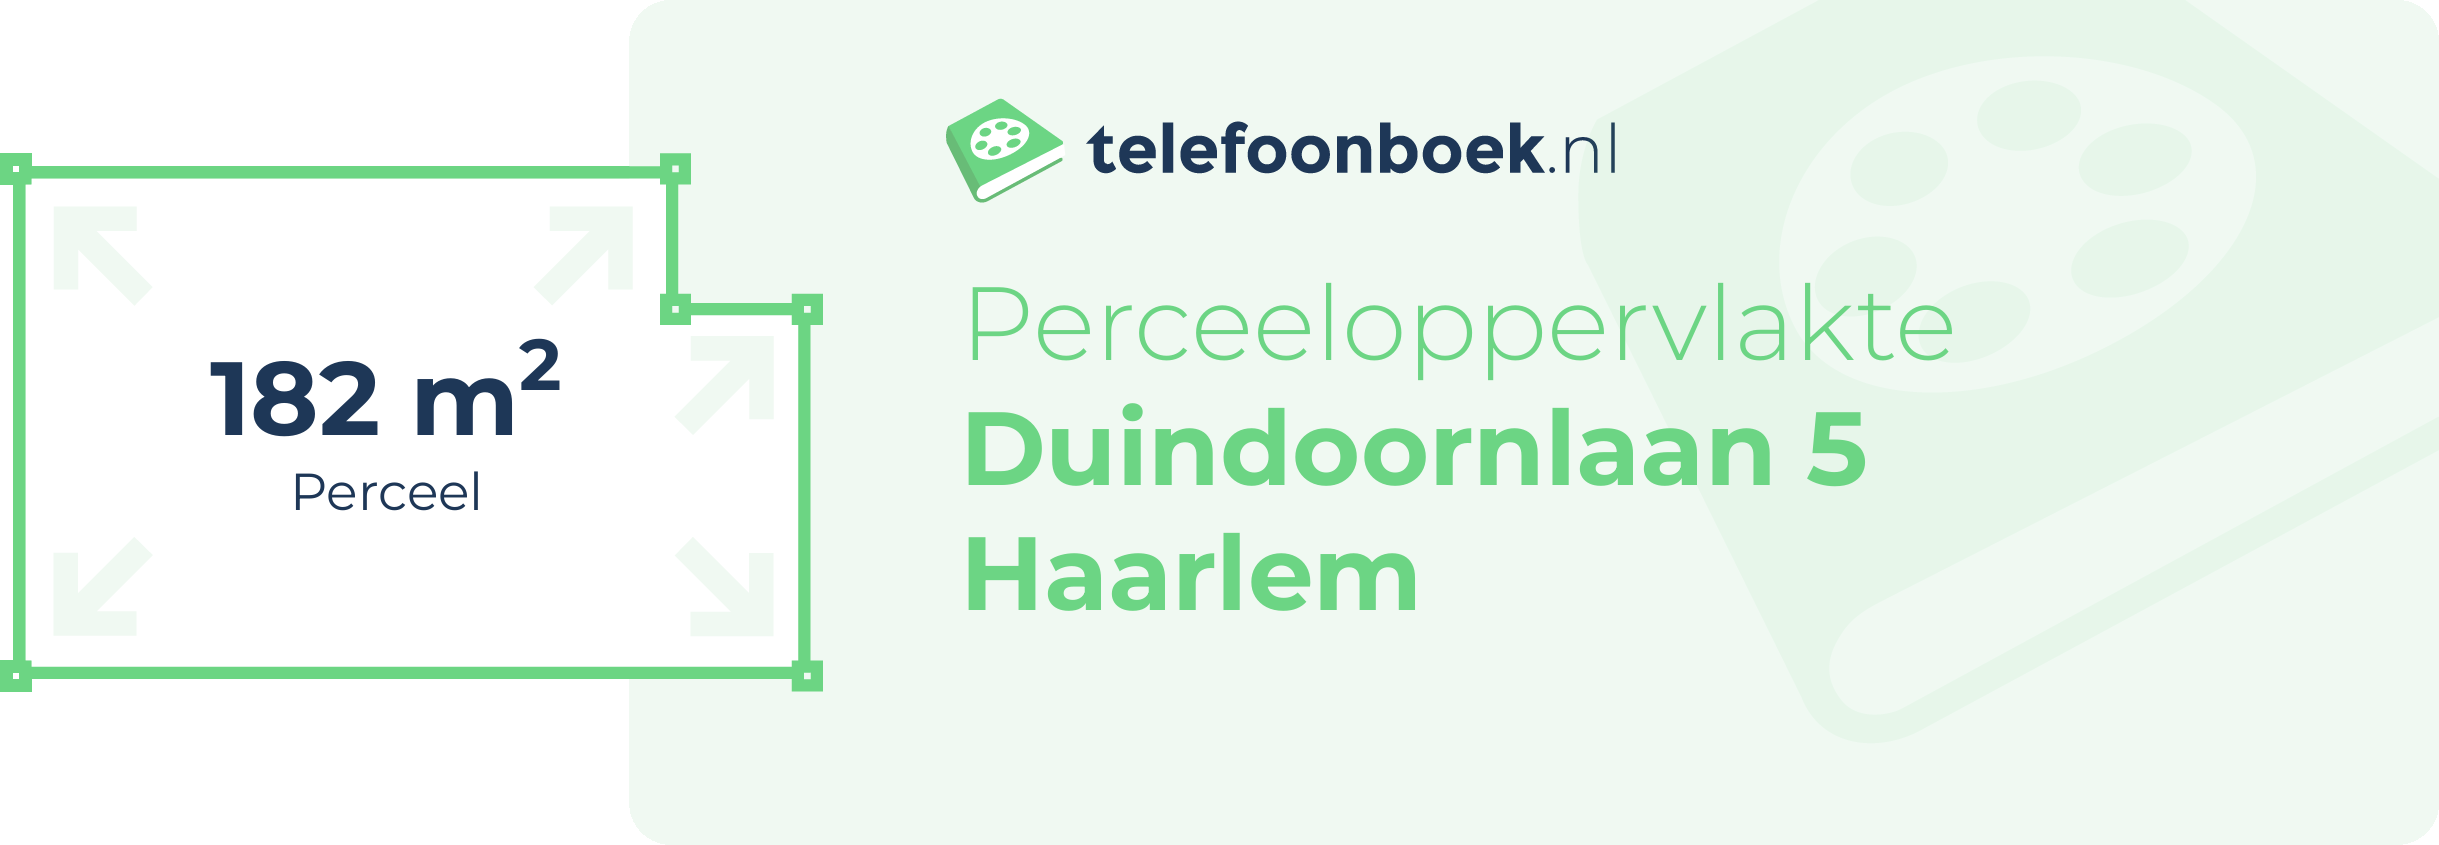 Perceeloppervlakte Duindoornlaan 5 Haarlem